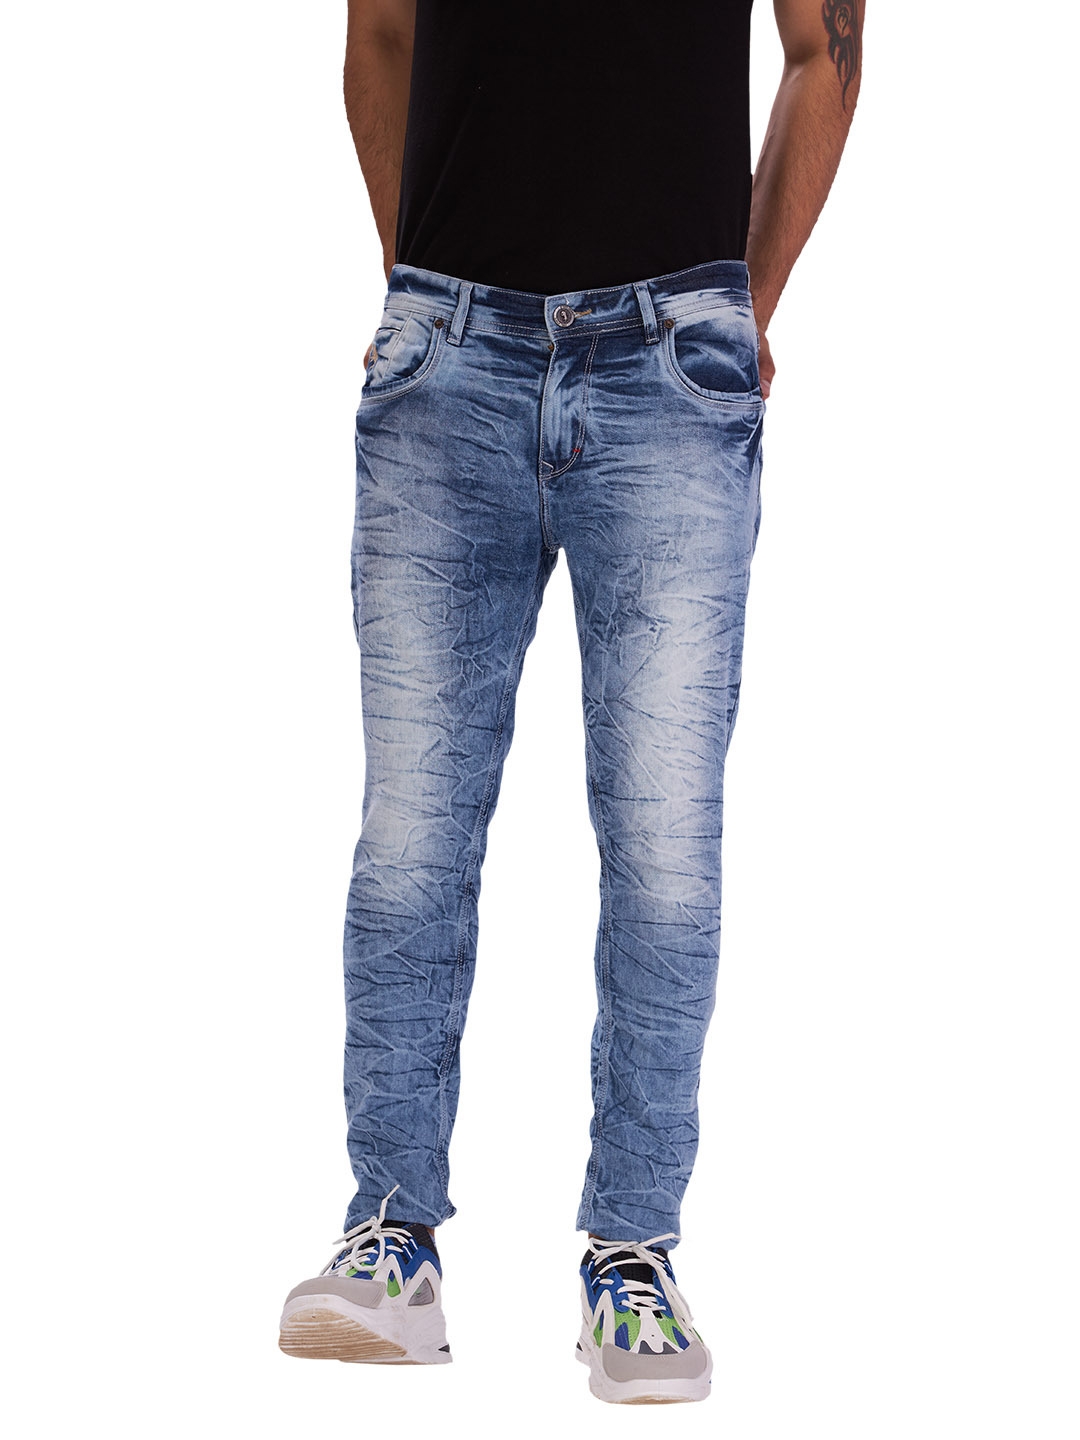 D'cot by Donear | D'cot by Donear Men's Blue Cotton Jeans